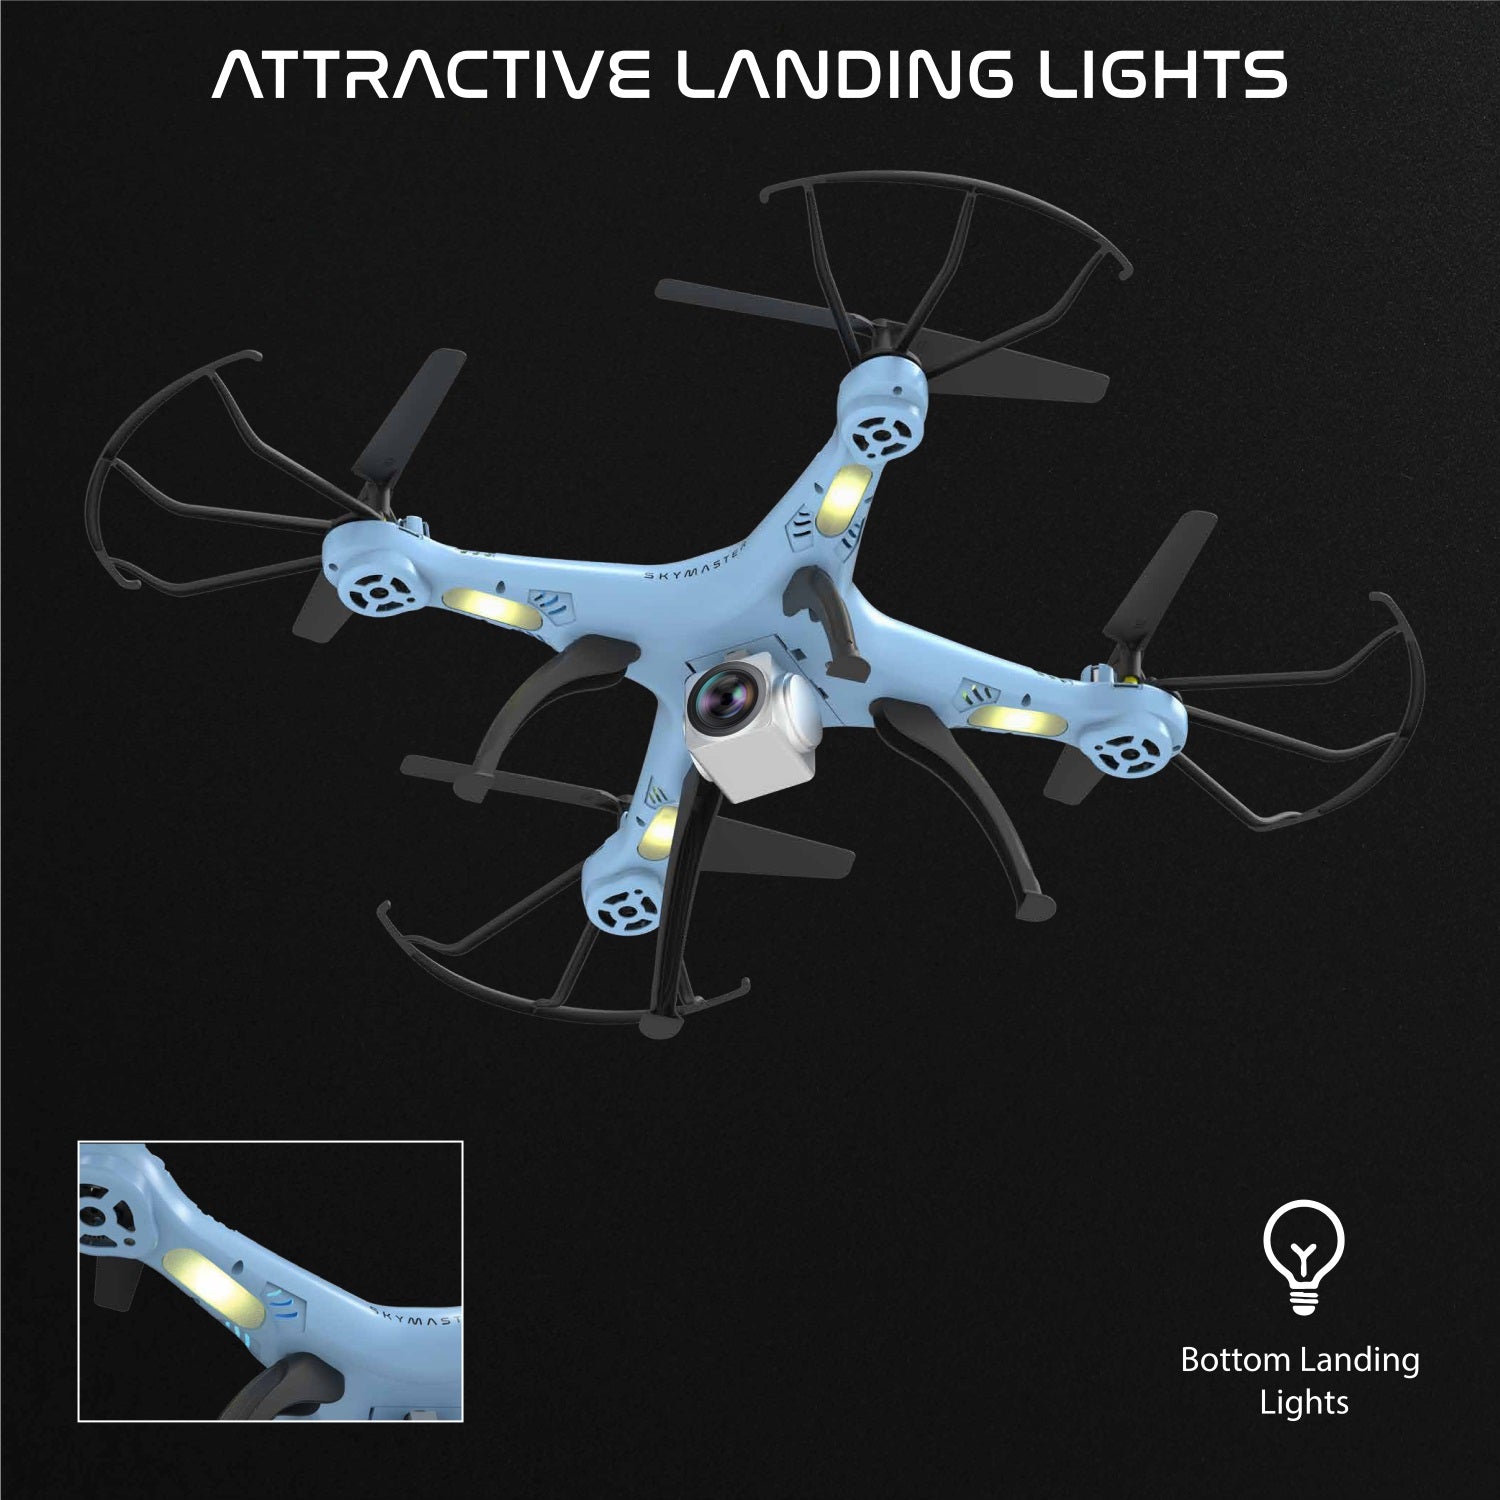 skymaster drone landing gears. buy extra landing gears for skymaster